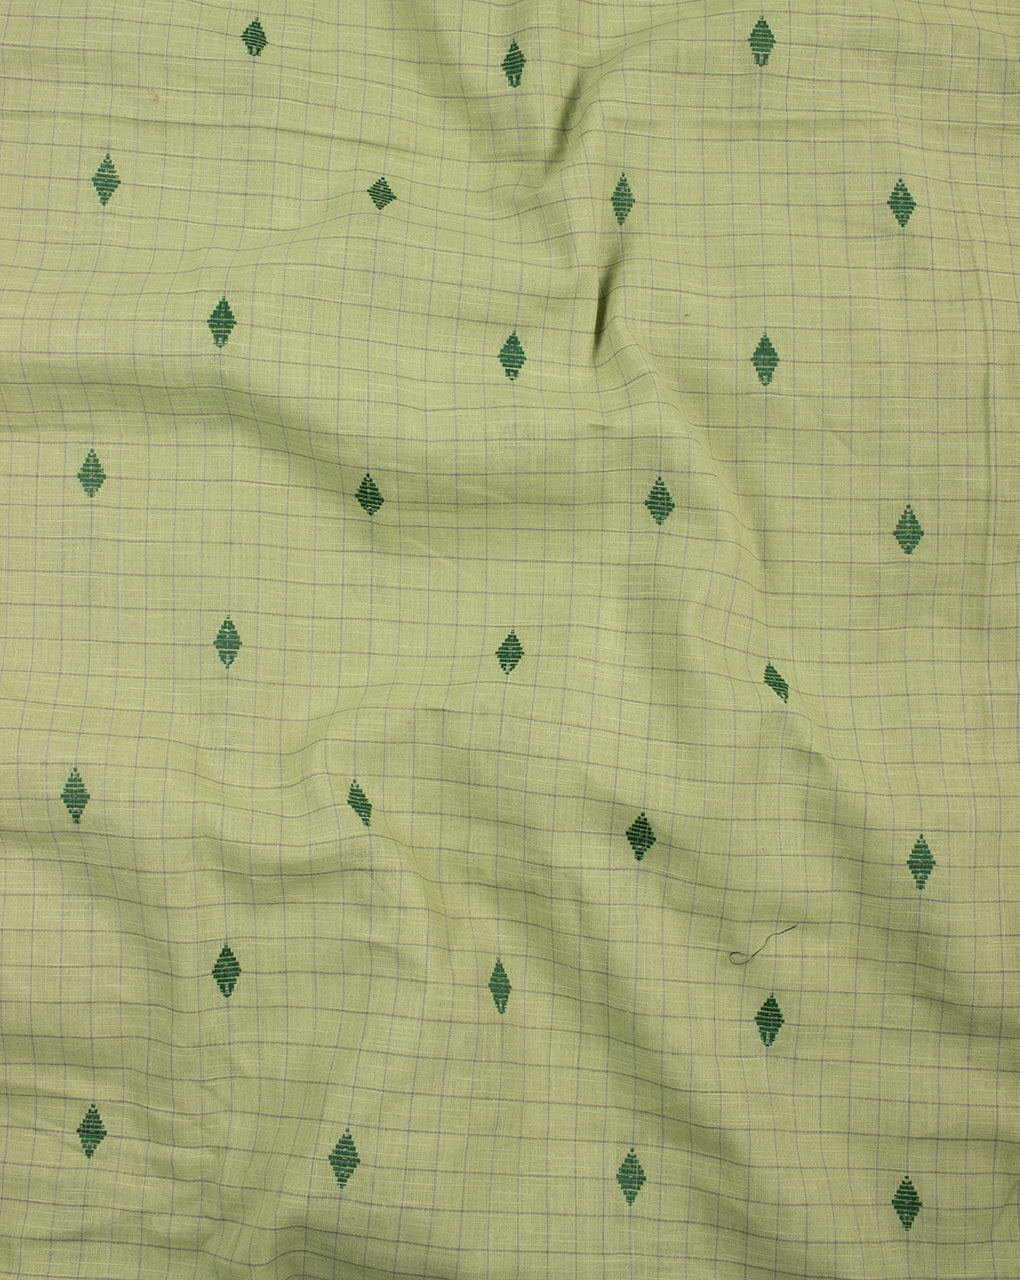 Pistachio Green Beige Checks Pattern Woven Loom Textured Cotton Fabric - Fabriclore.com